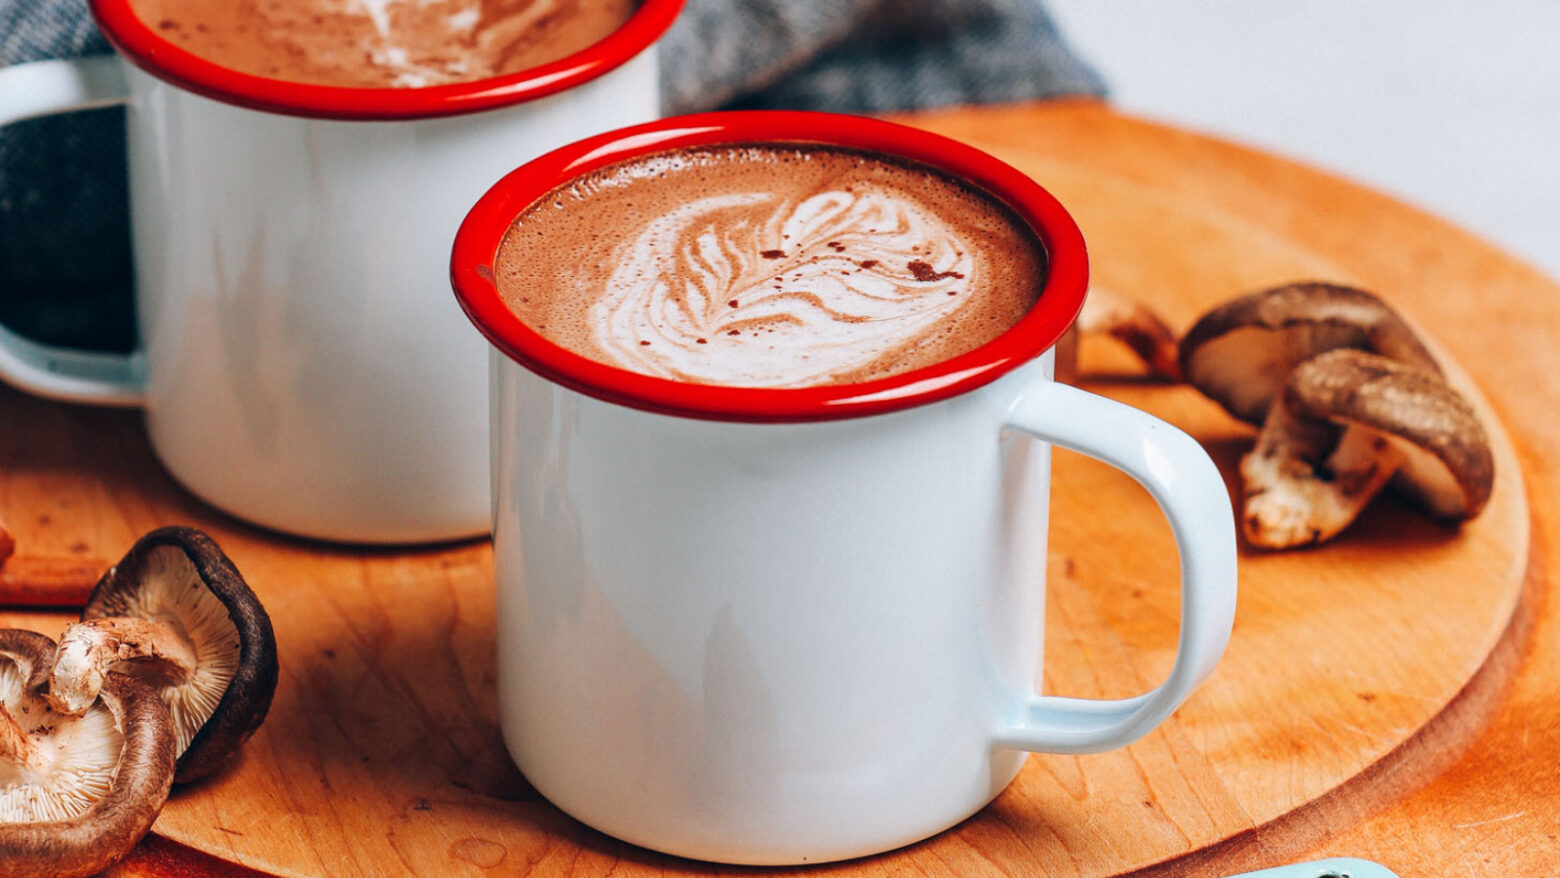 A caffeine-free mushroom latte